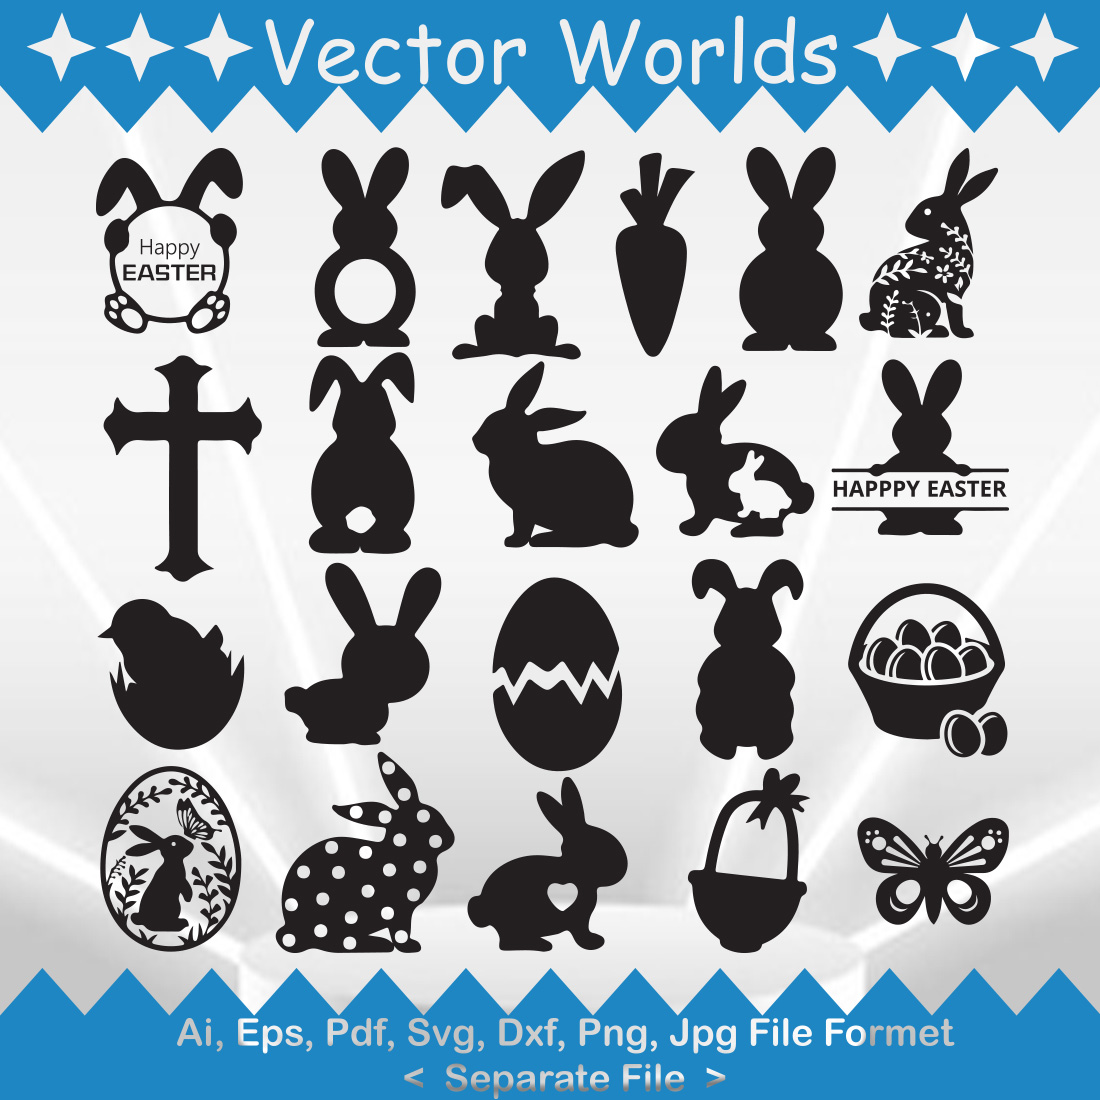 Easter SVG Vector Design cover image.